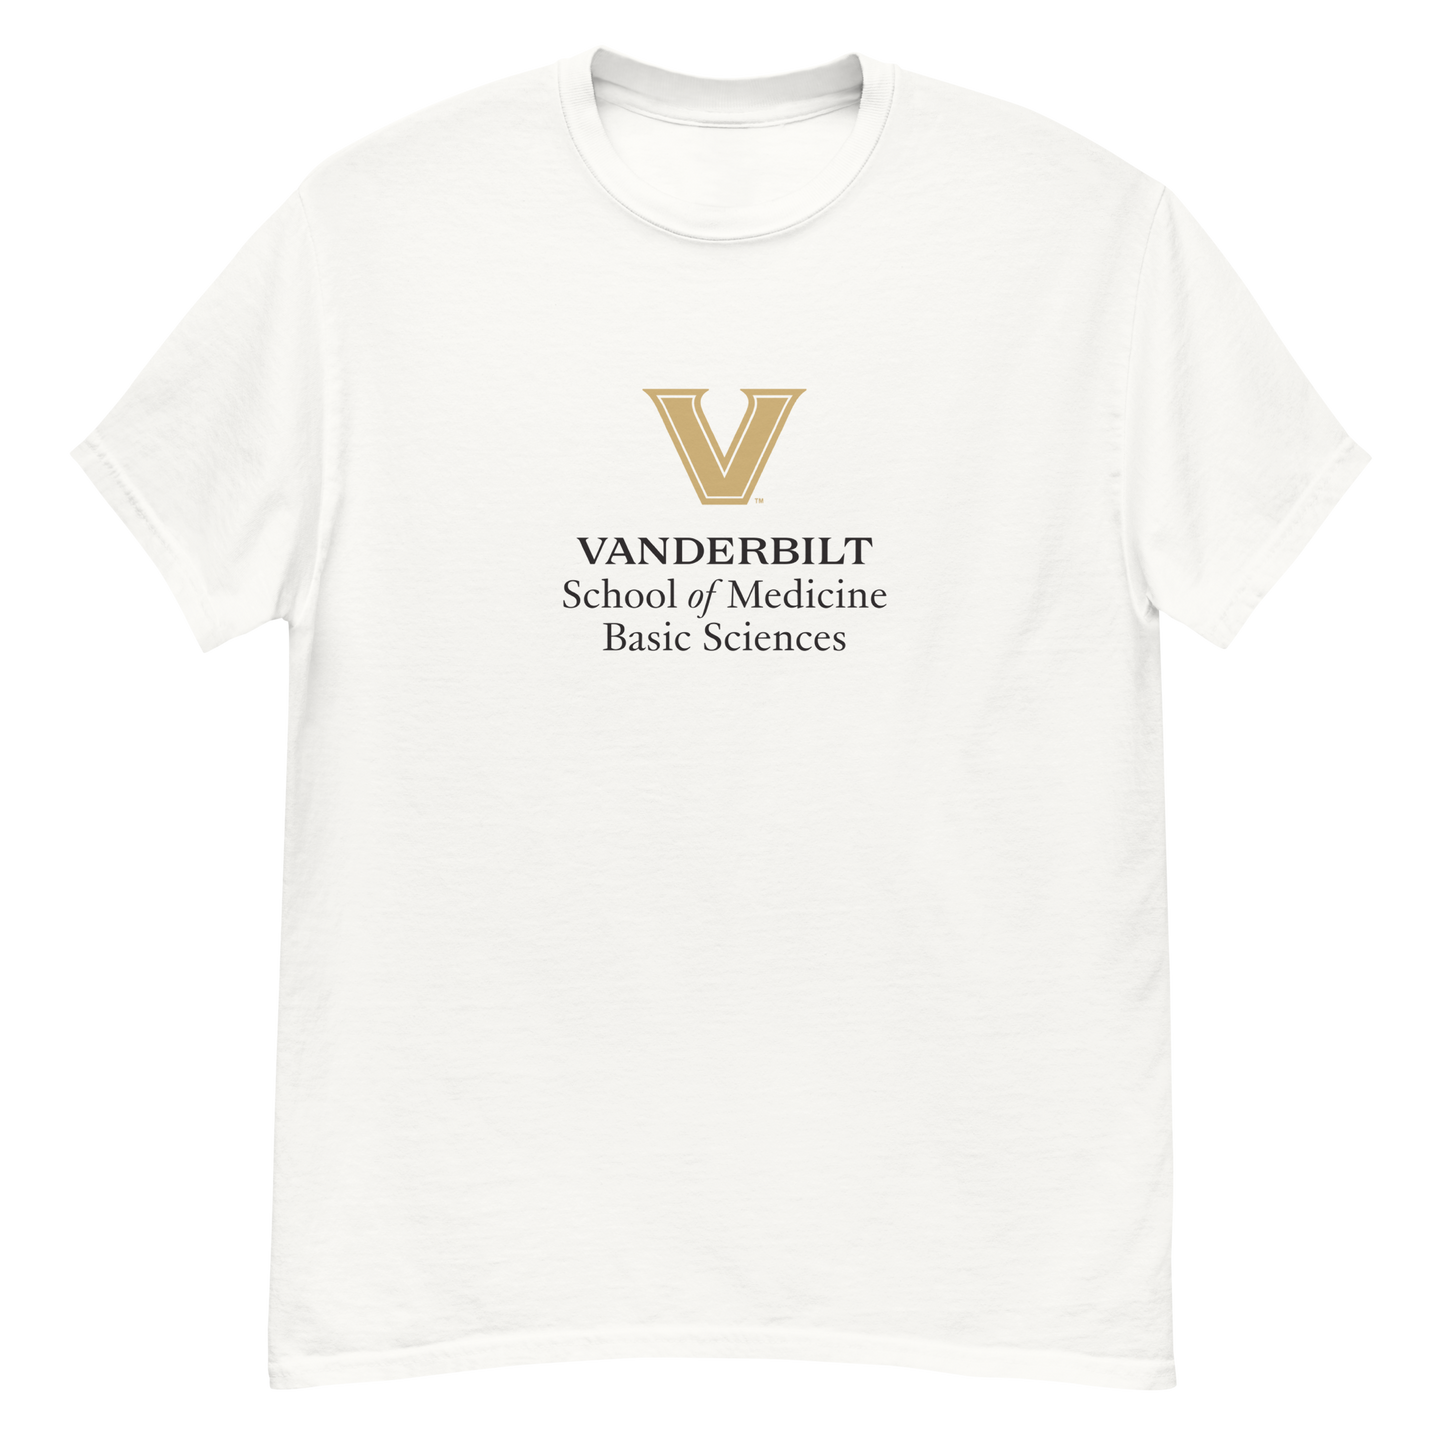 VU Basic Sciences classic tee